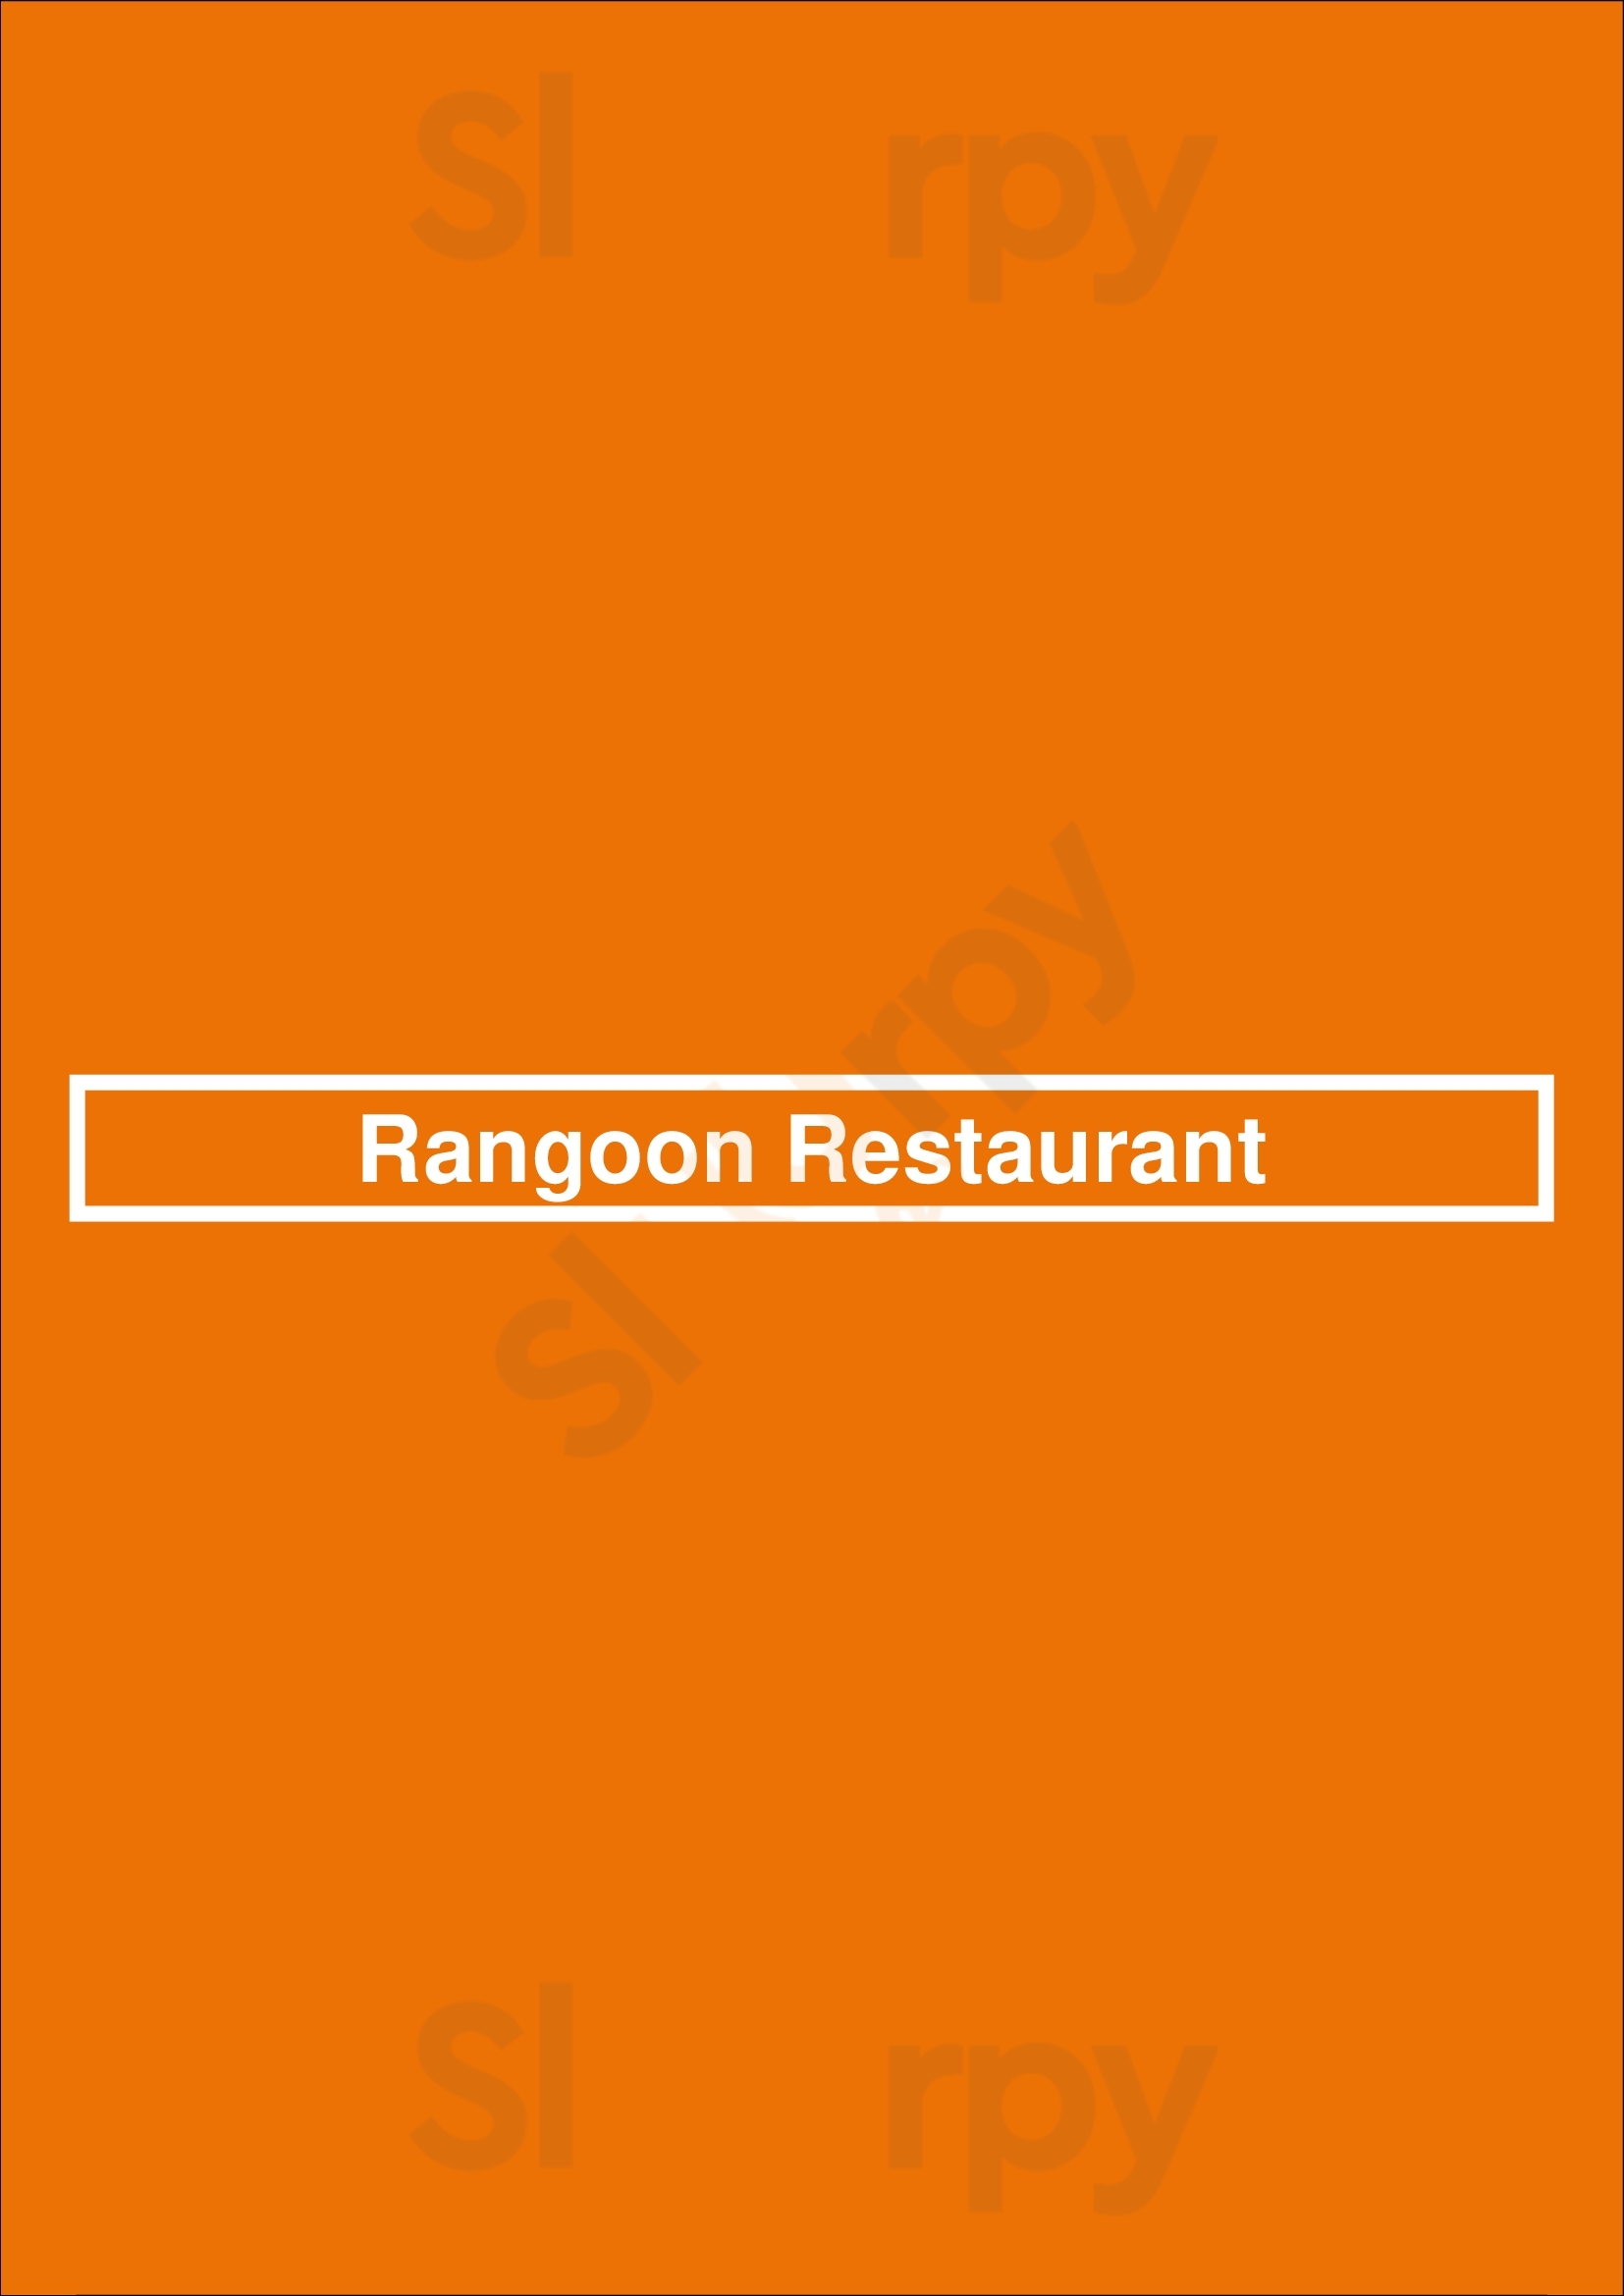 Rangoon Restaurant Ottawa Menu - 1